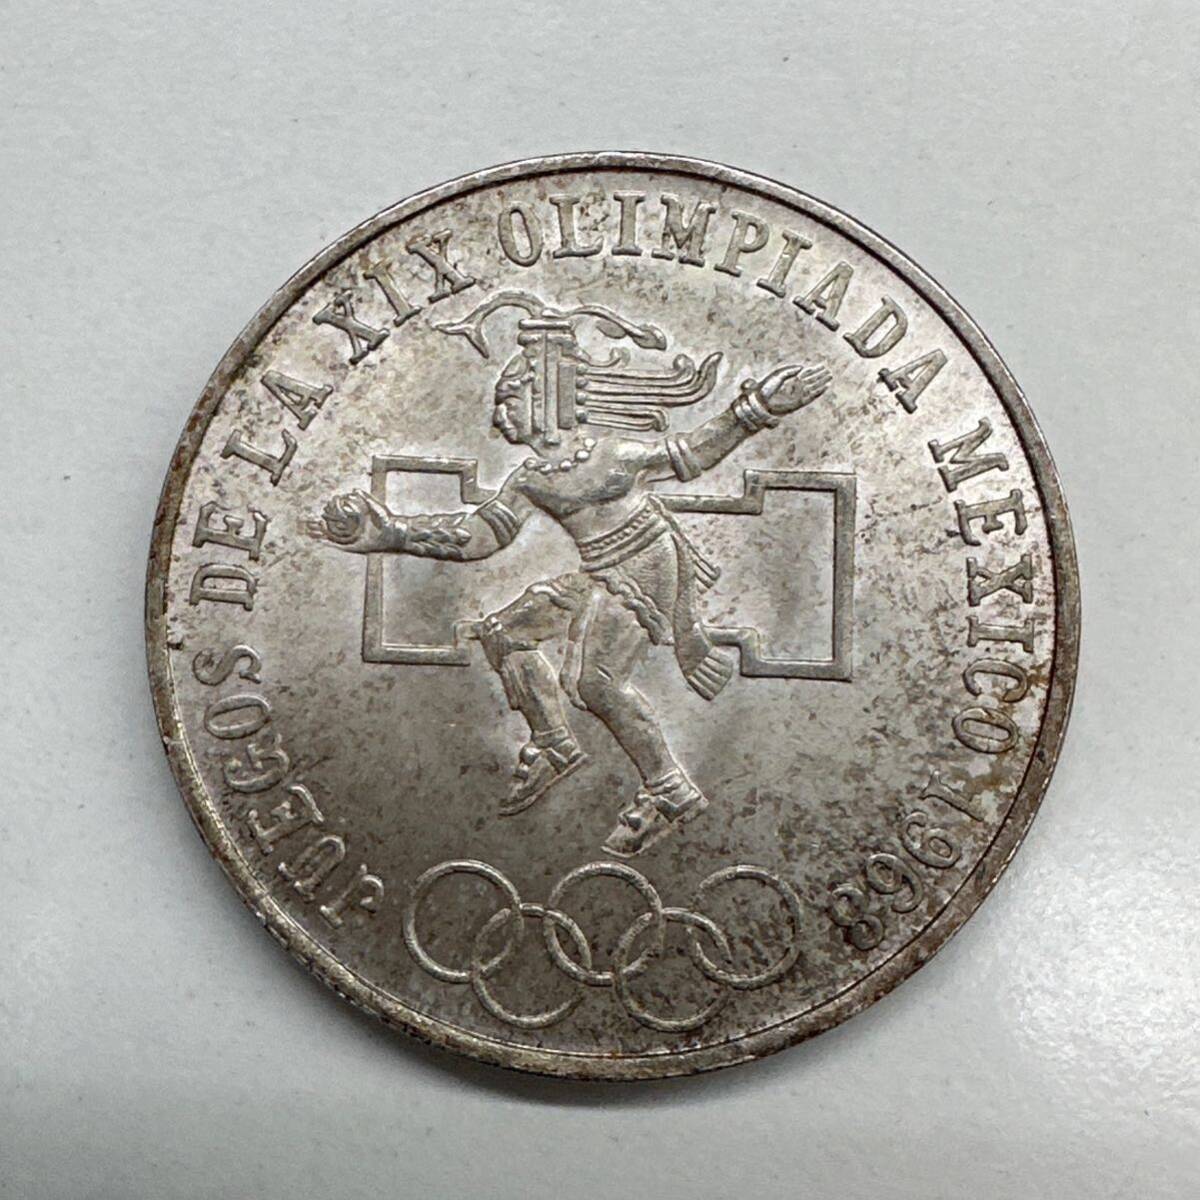 【TS0319】1968年 メキシコオリンピック 25ペソ銀貨 硬貨 コイン 通貨 貨幣 レトロ アンティーク コレクション_画像1